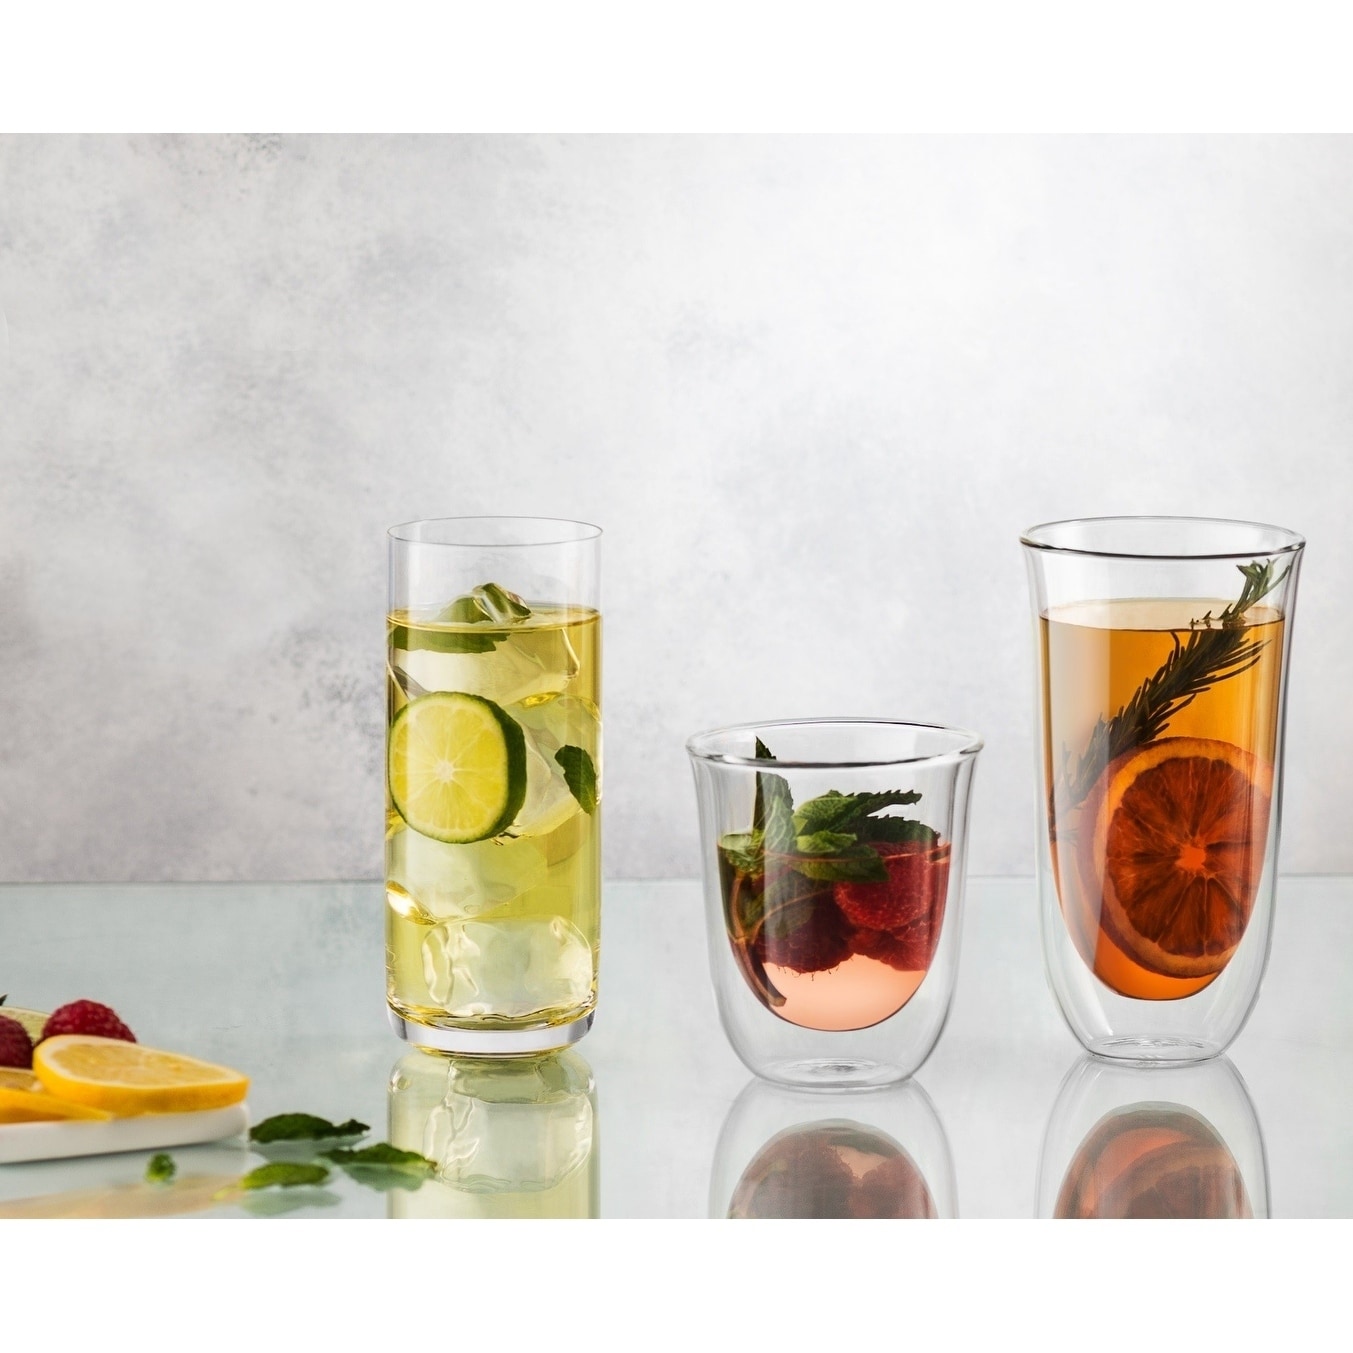 https://ak1.ostkcdn.com/images/products/21234405/JoyJolt-Spike-Double-Wall-Glasses-13.5-Ounce-Cocktail-Drinkware-Glass-set-of-2-80d2e192-e38e-45ce-8082-6459cfb6b107.jpg